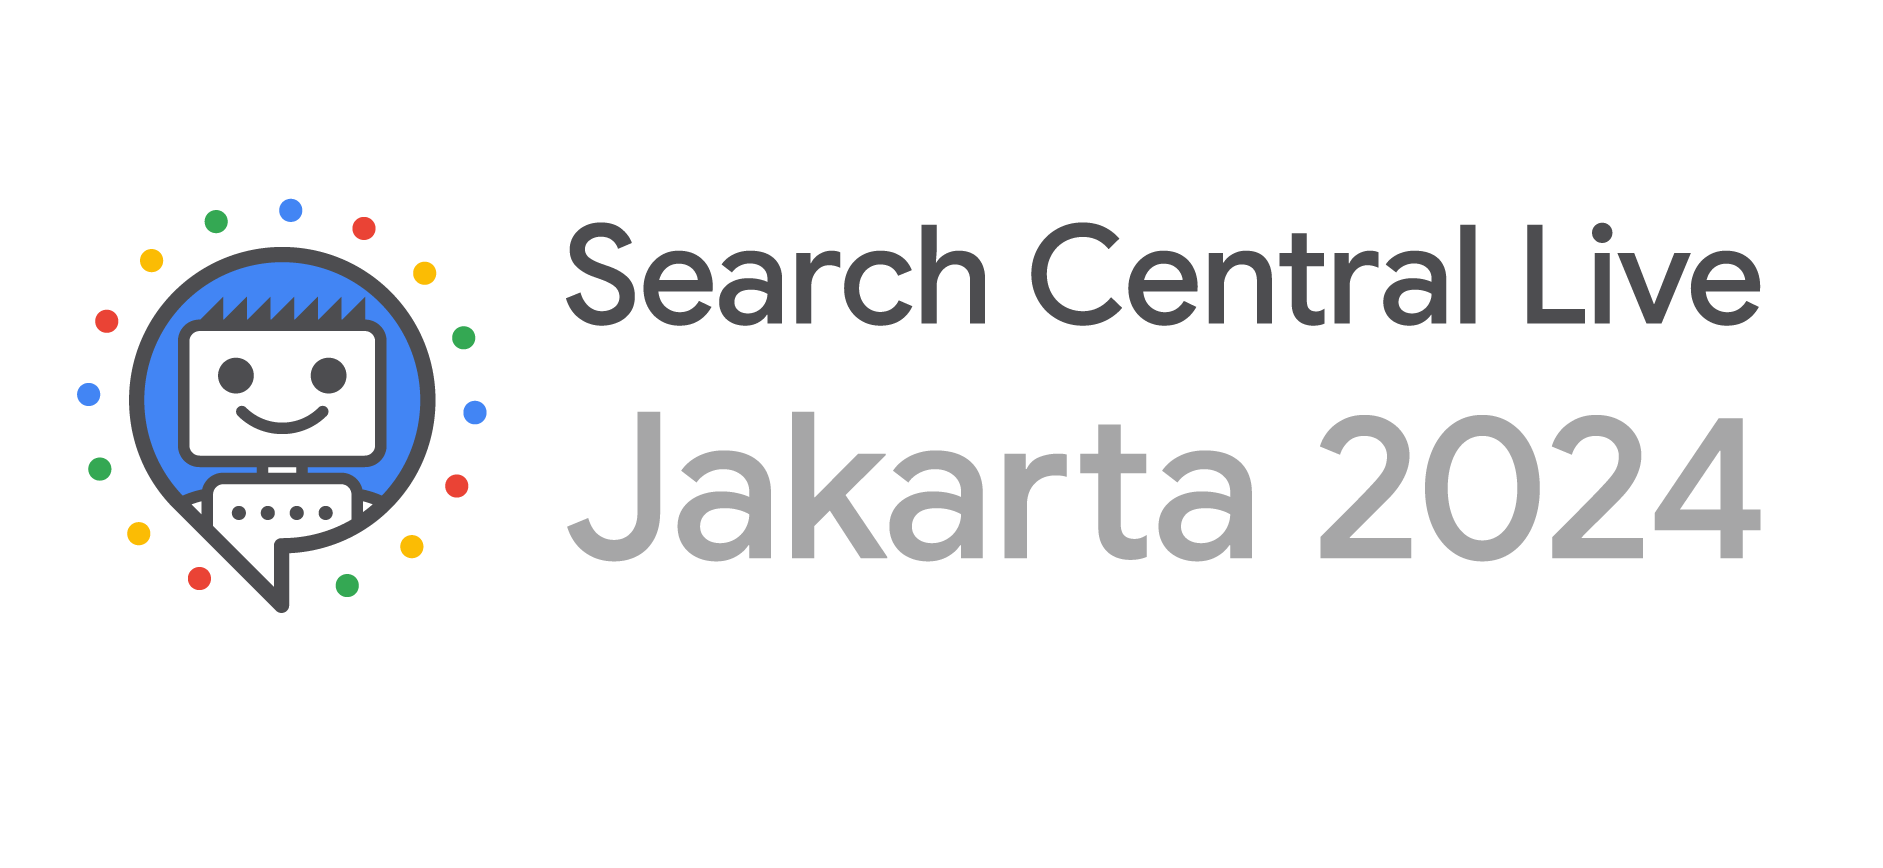 فعالية Search Central Live في جاكرتا لعام 2024